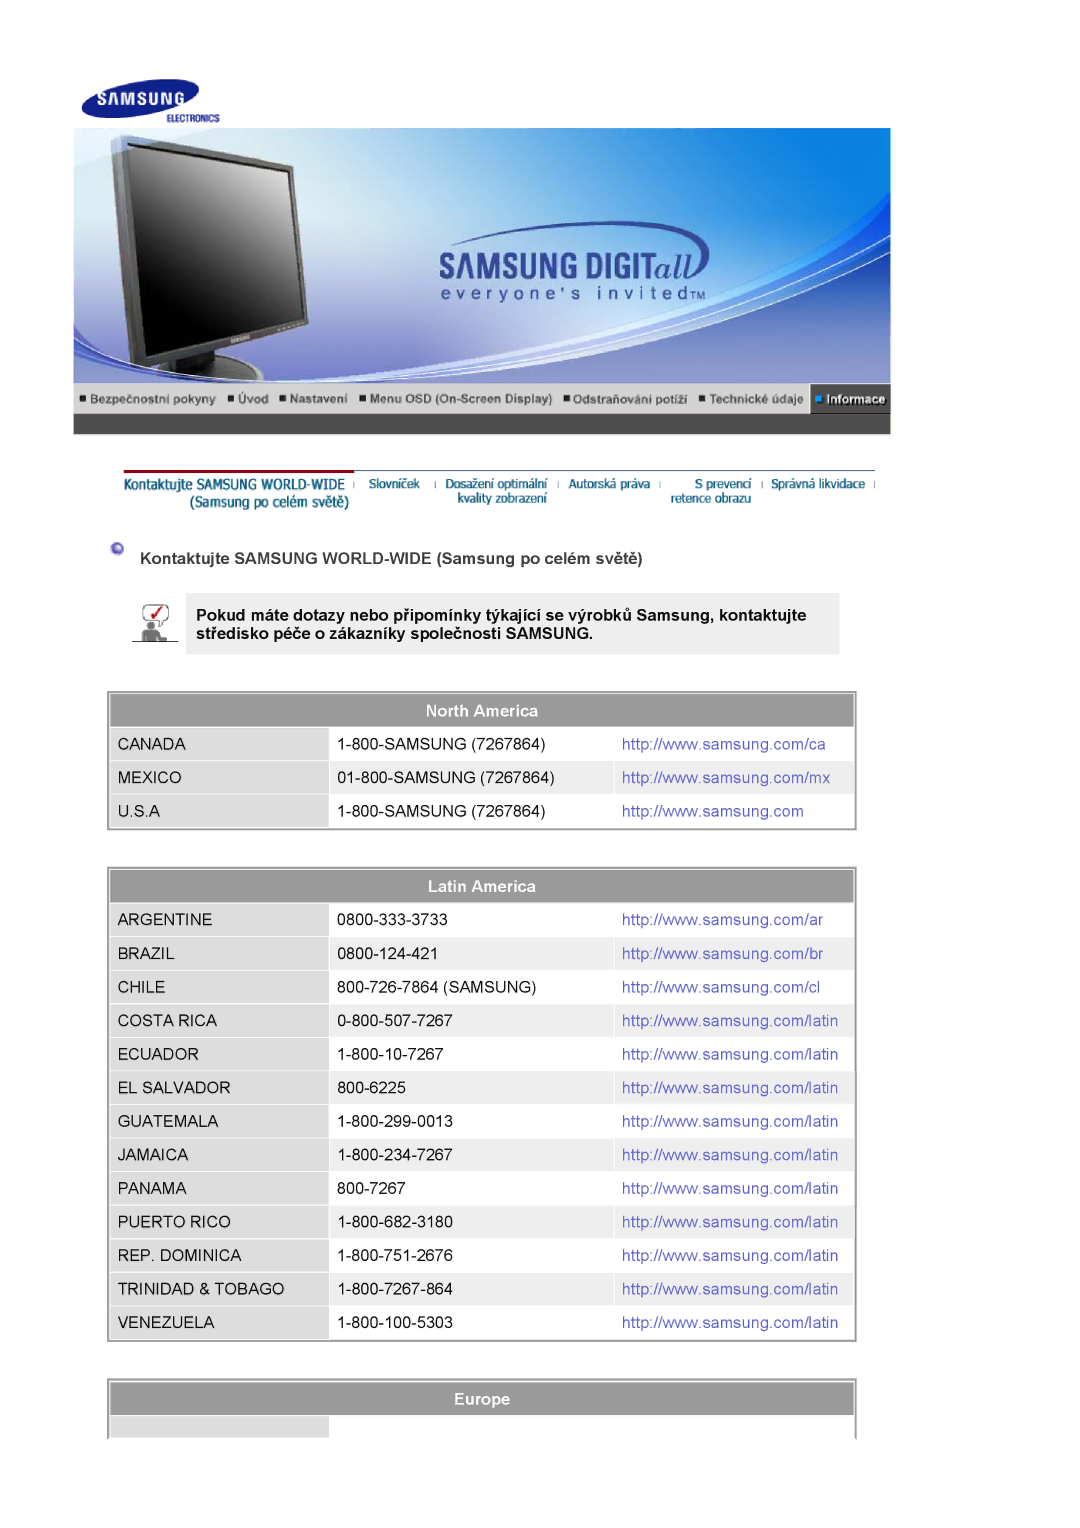 Samsung LS19HADKSE/EDC, LS19HADKSP/EDC, LS17HADKSX/EDC Kontaktujte Samsung WORLD-WIDE Samsung po celém světě, Latin America 